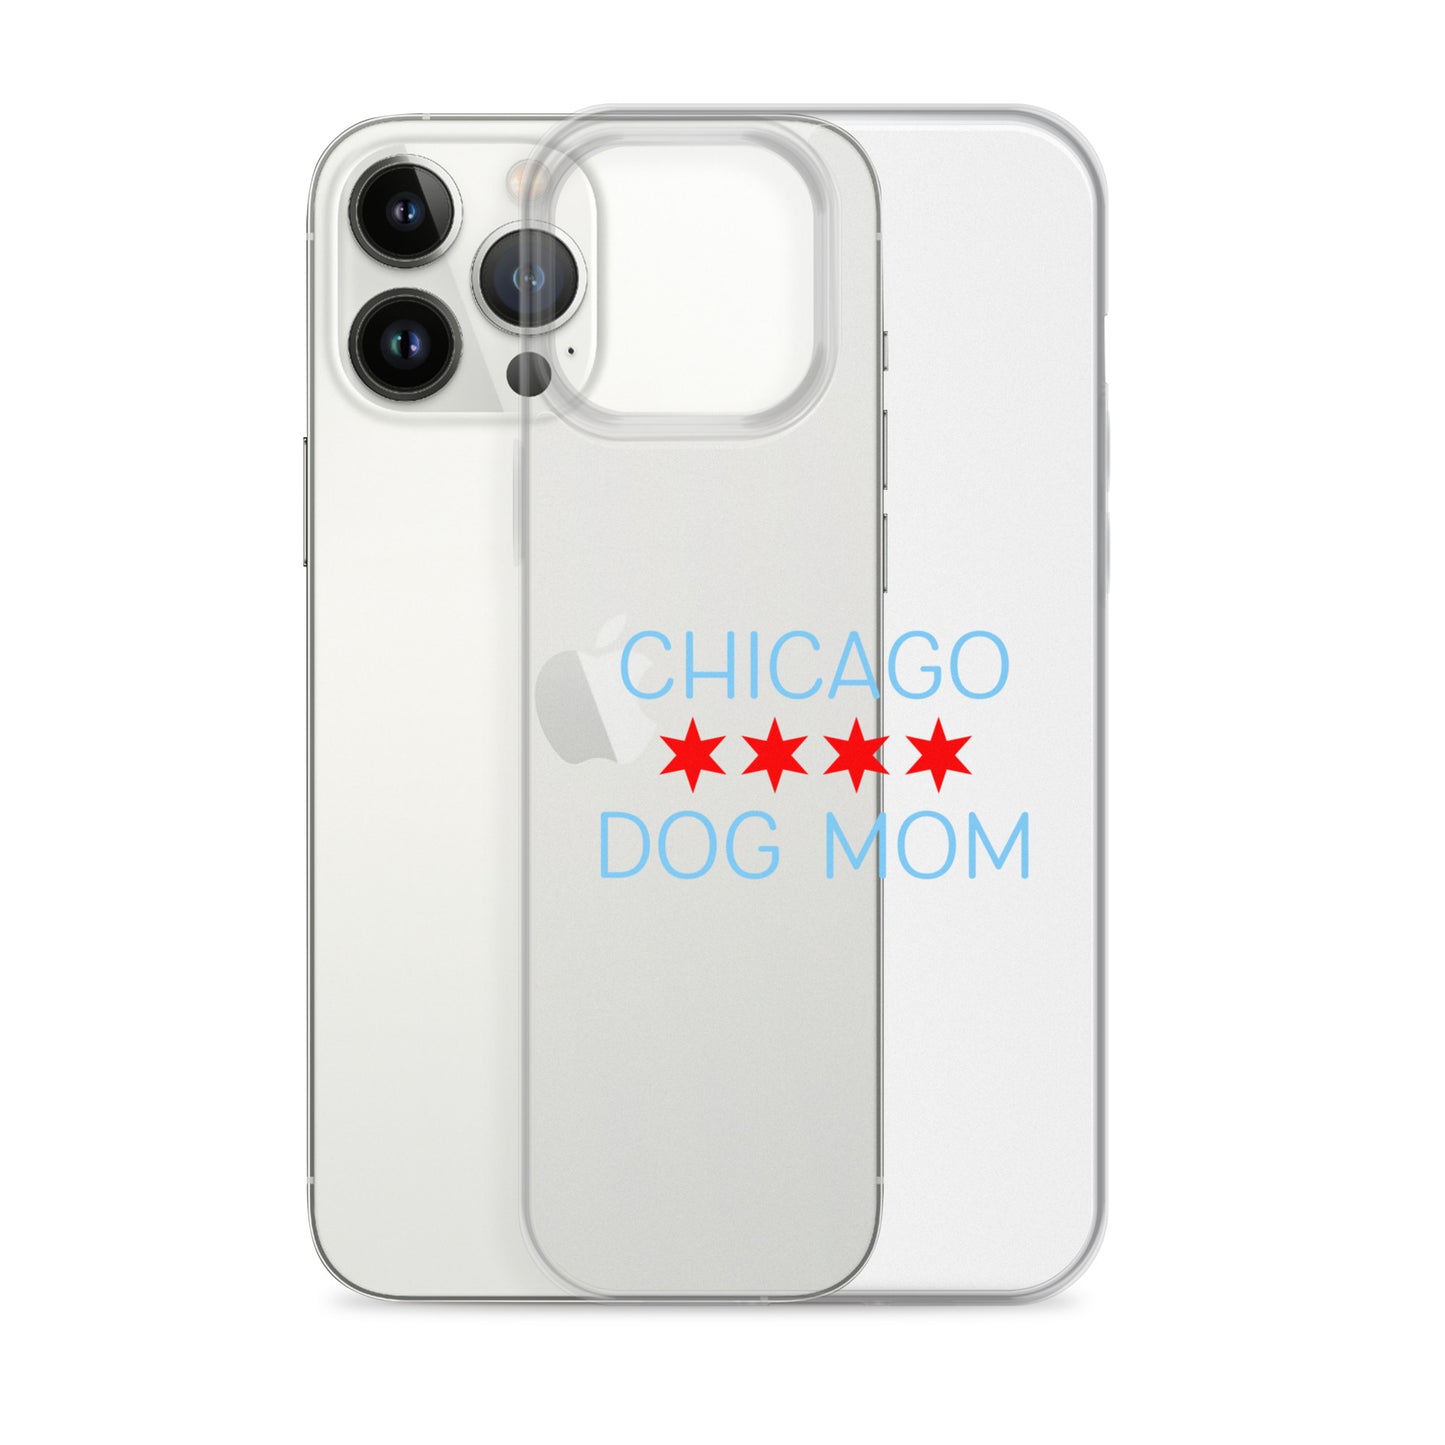 Chicago Dog Mom iPhone Case